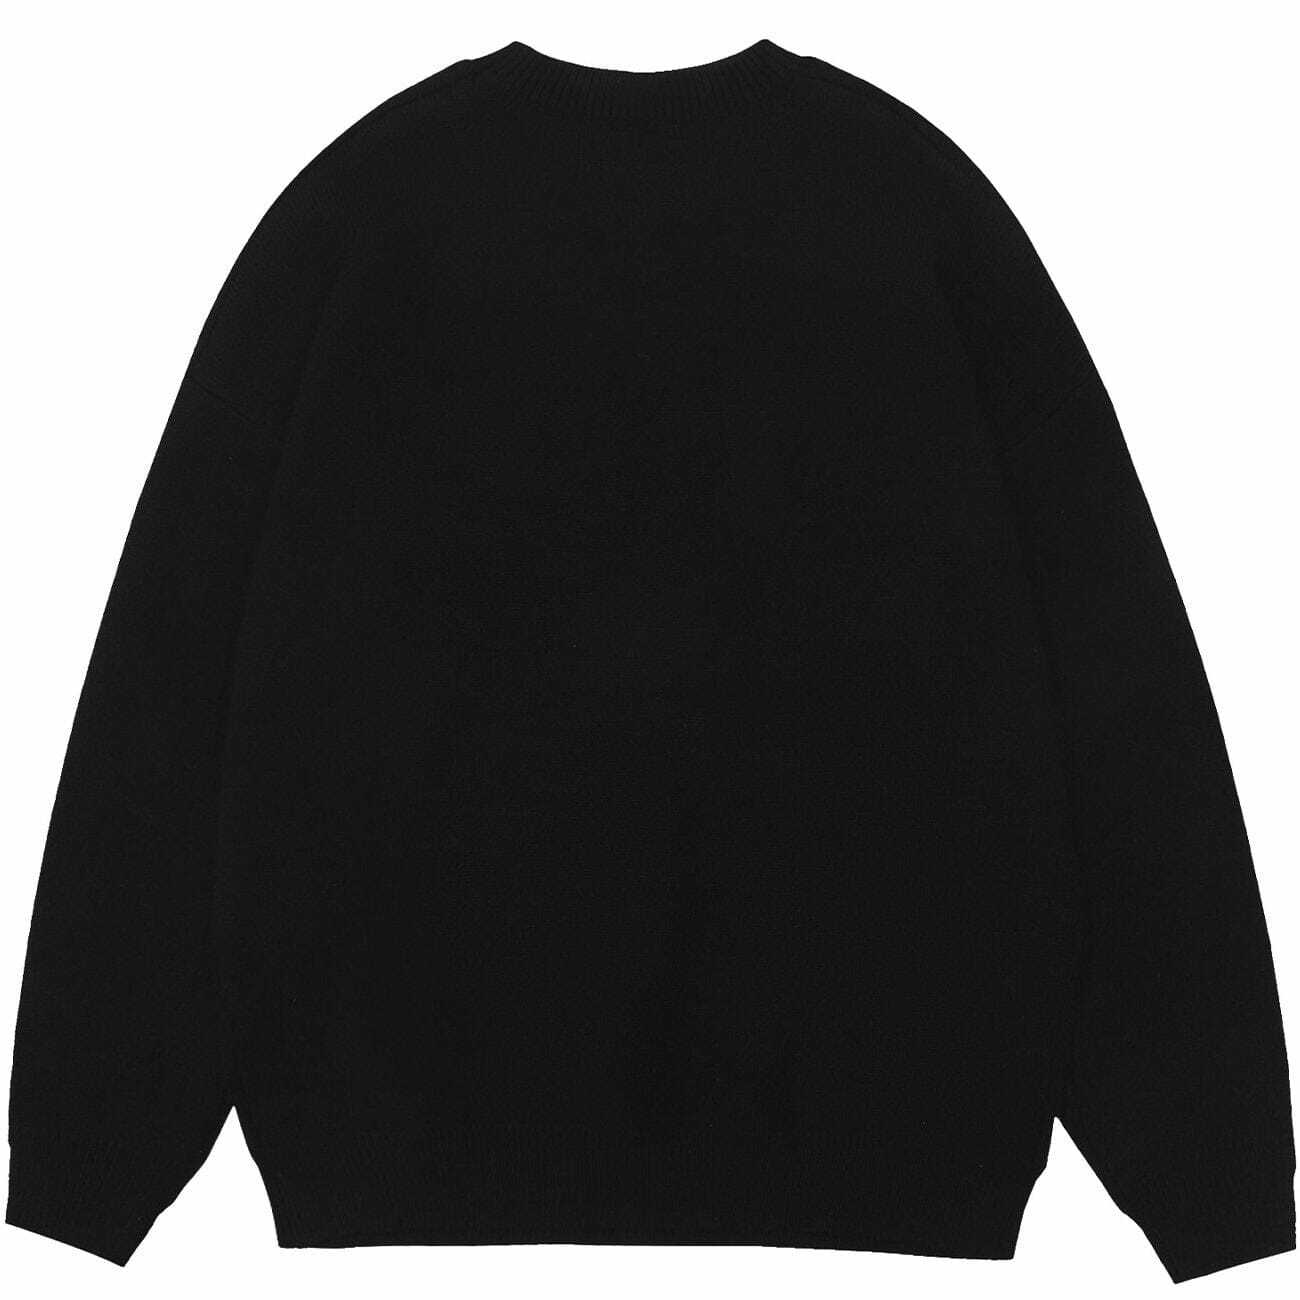 tiger print knit sweater edgy & vibrant streetwear 6673